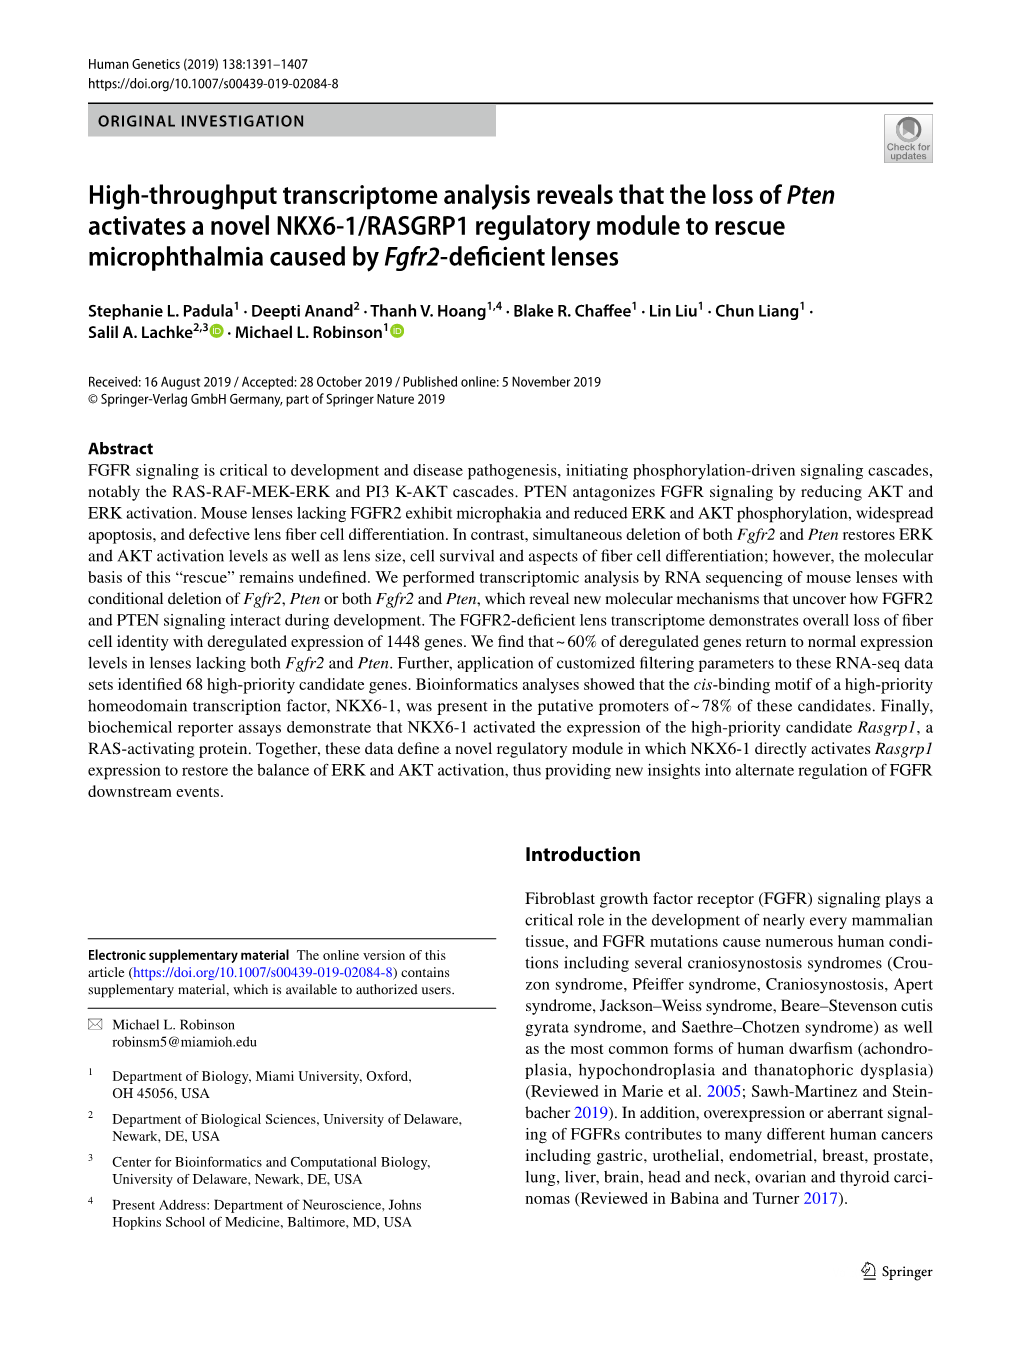 High-Throughput Transcriptome Analysis Reveals That the Loss of Pten Activates a Novel NKX6-1/RASGRP1 Regulatory Module to Rescu